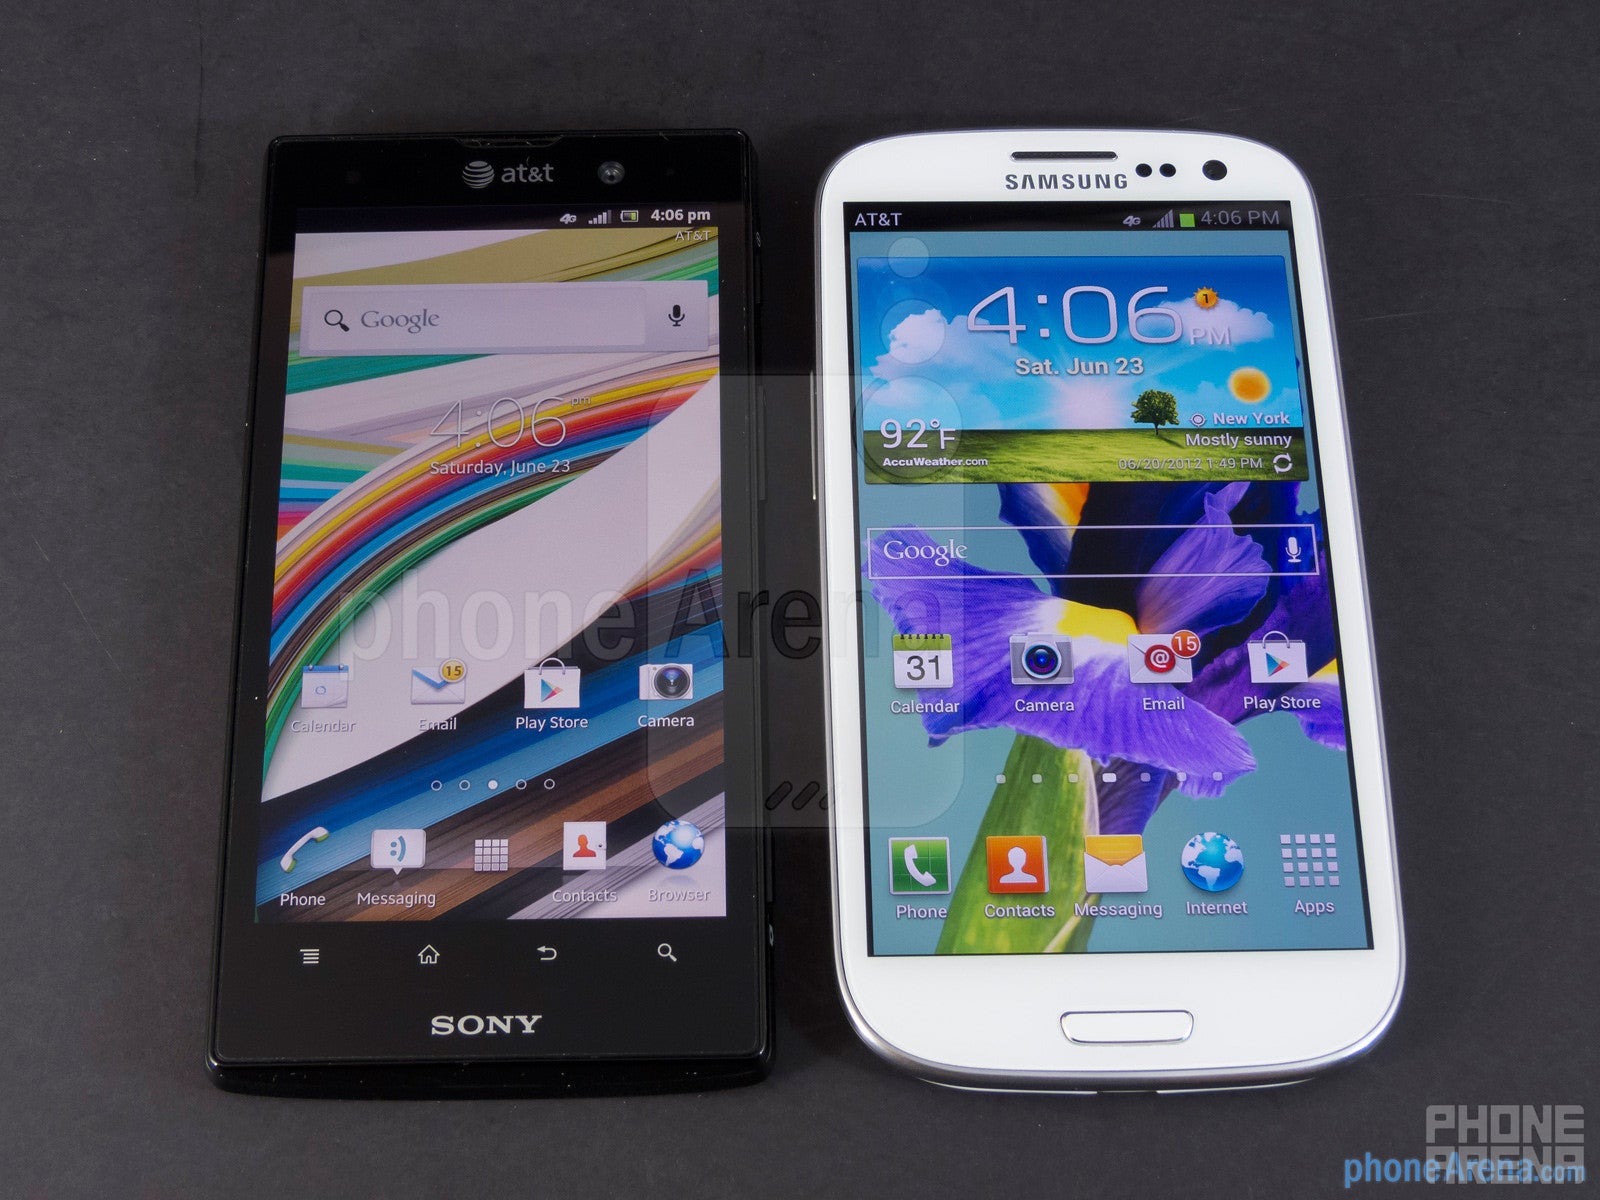 Sony Xperia ion vs Samsung Galaxy S III